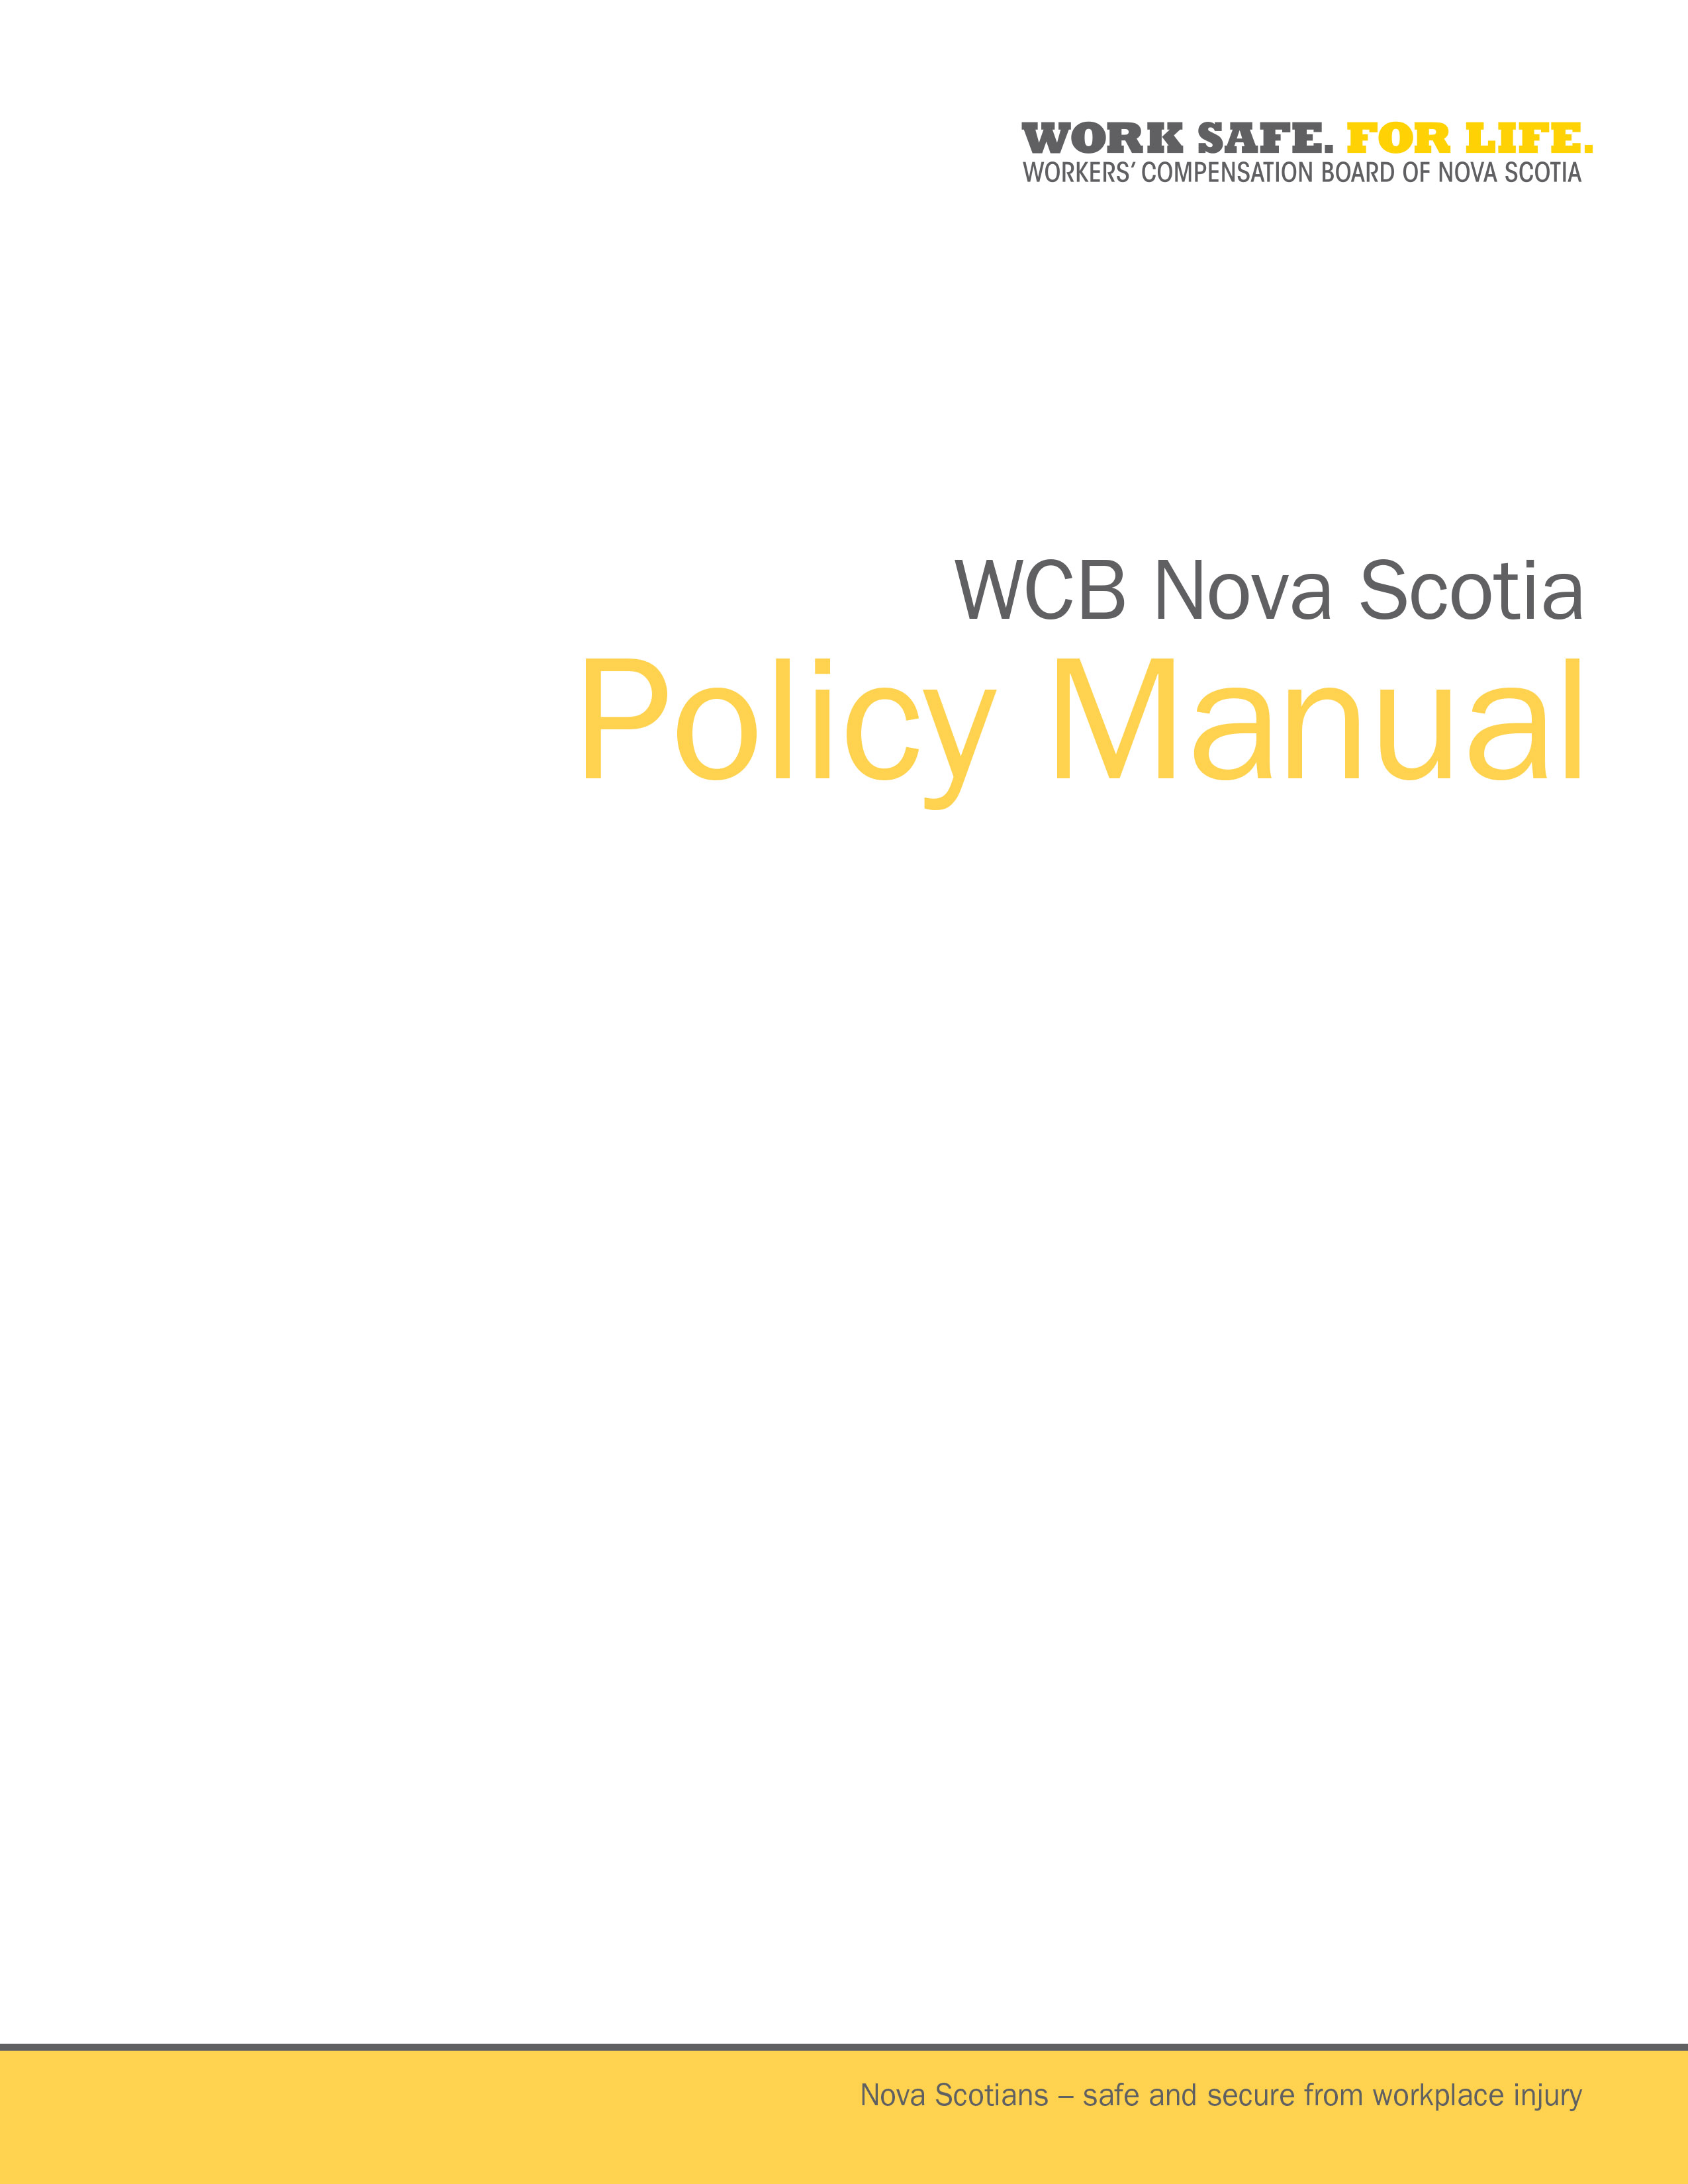 WCB Nova Scotia's Policy Manual